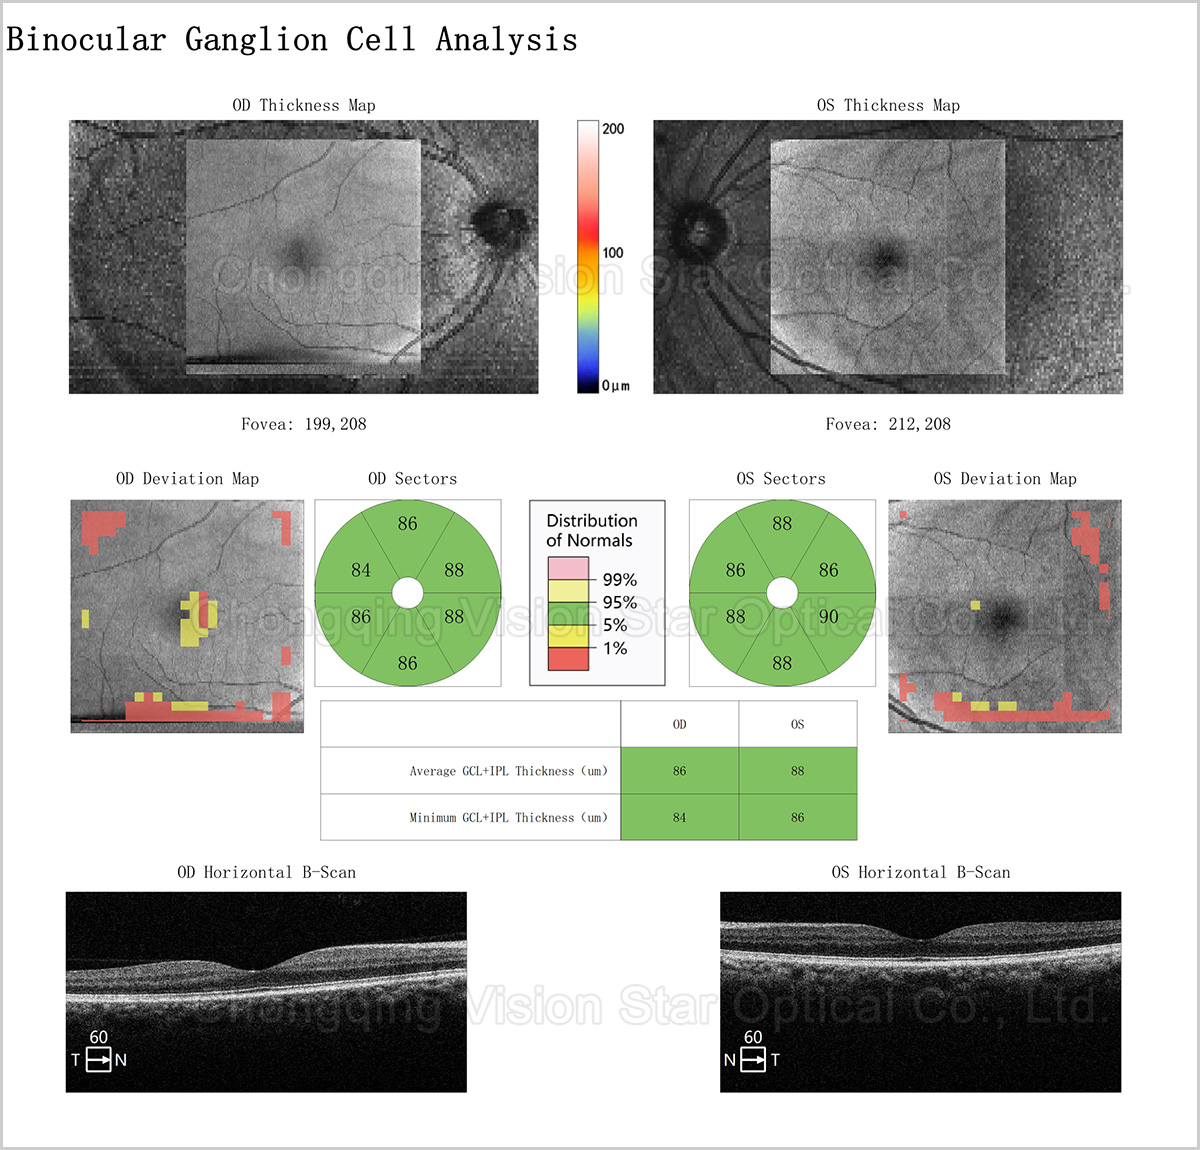 Binocular Ganglion Cell Analysis